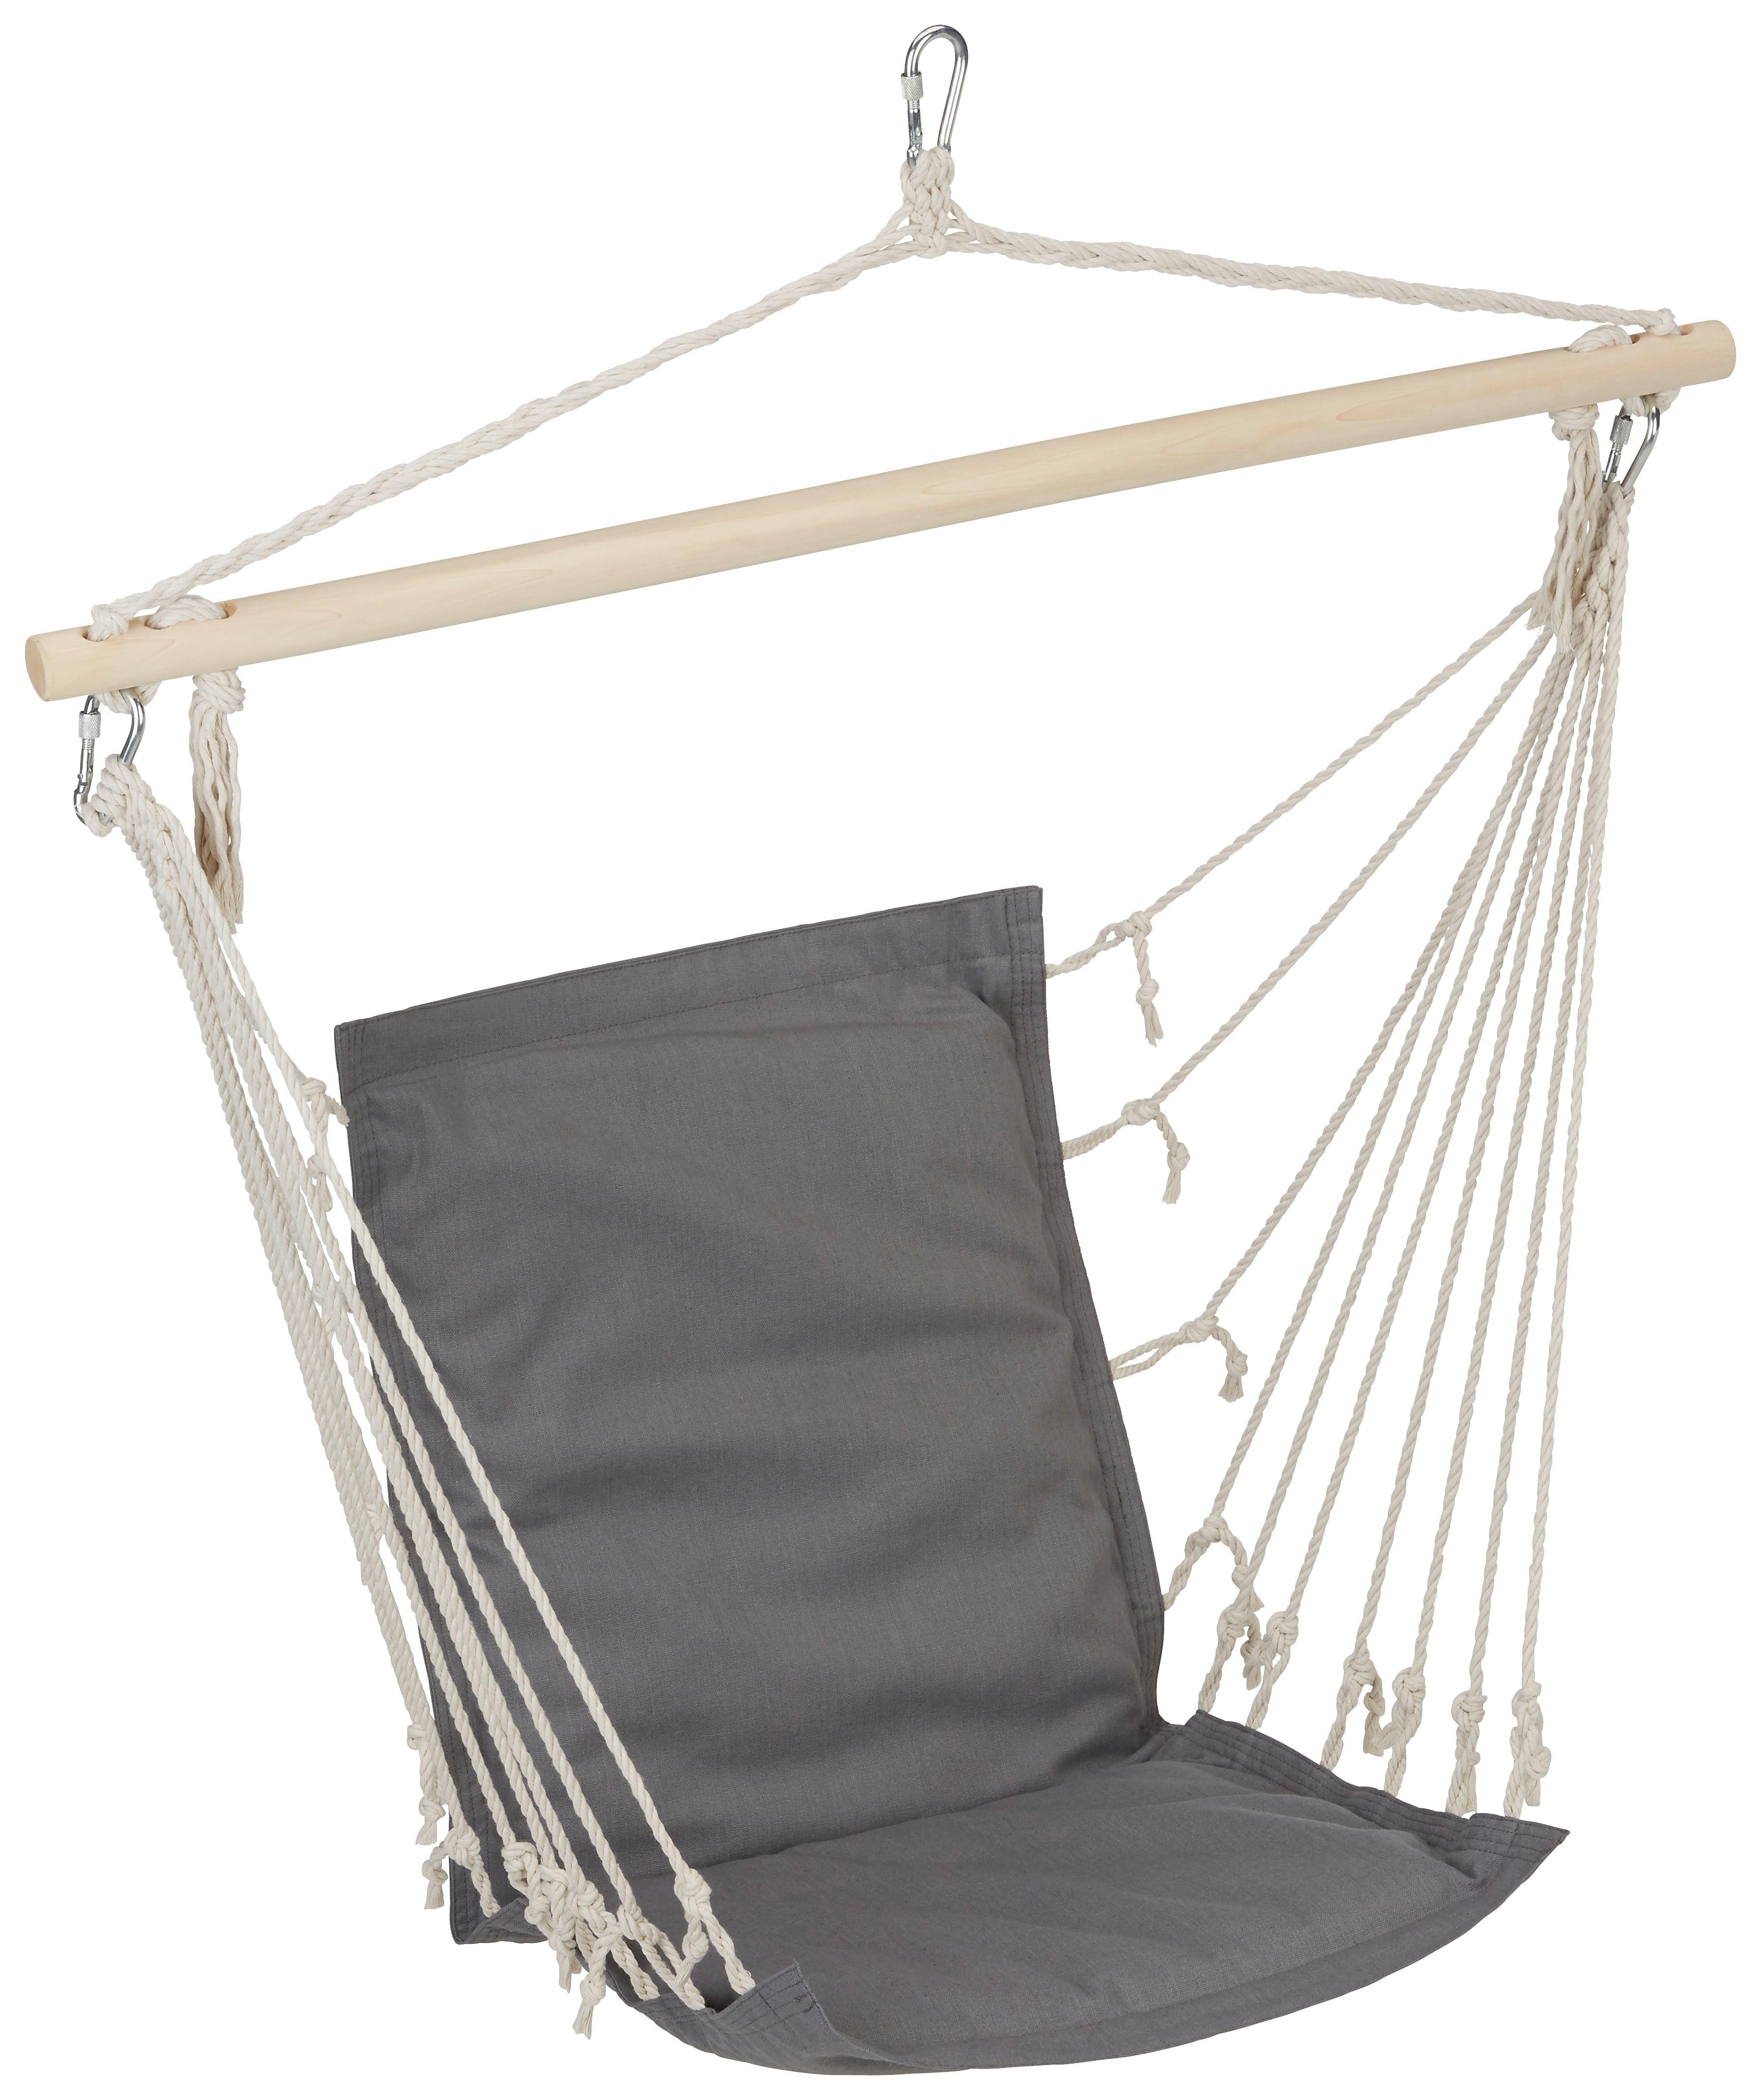 Hängesessel Relax in Grau - Naturfarben/Grau, Holz/Textil (100/47cm) - Modern Living